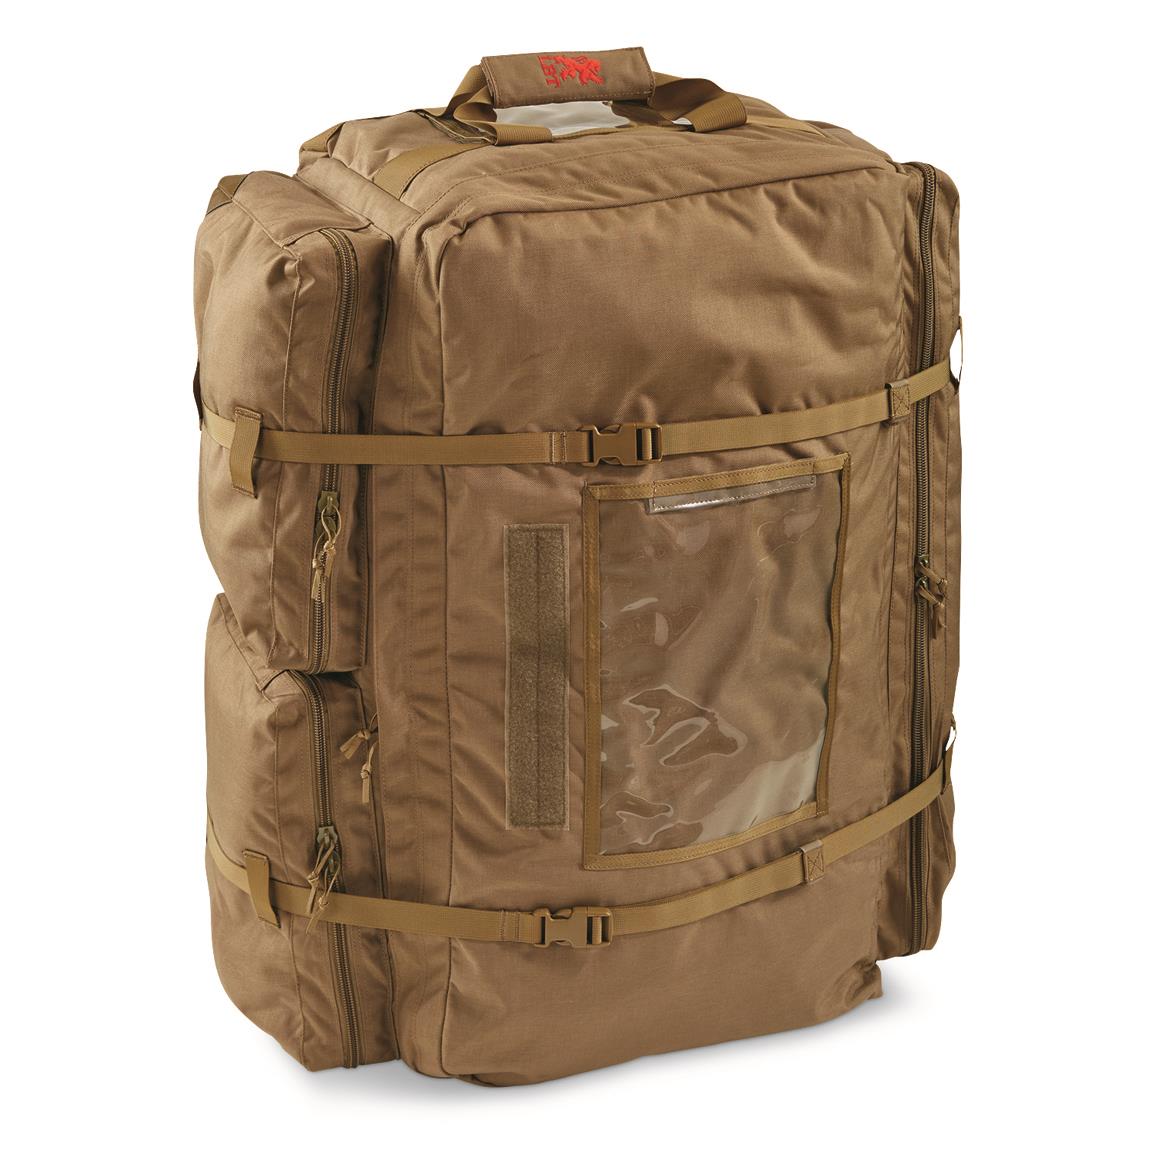 U.S. Military Surplus LBT Deployment Bag, New - 708553, Military & Camo Duffle Bags at Sportsman ...